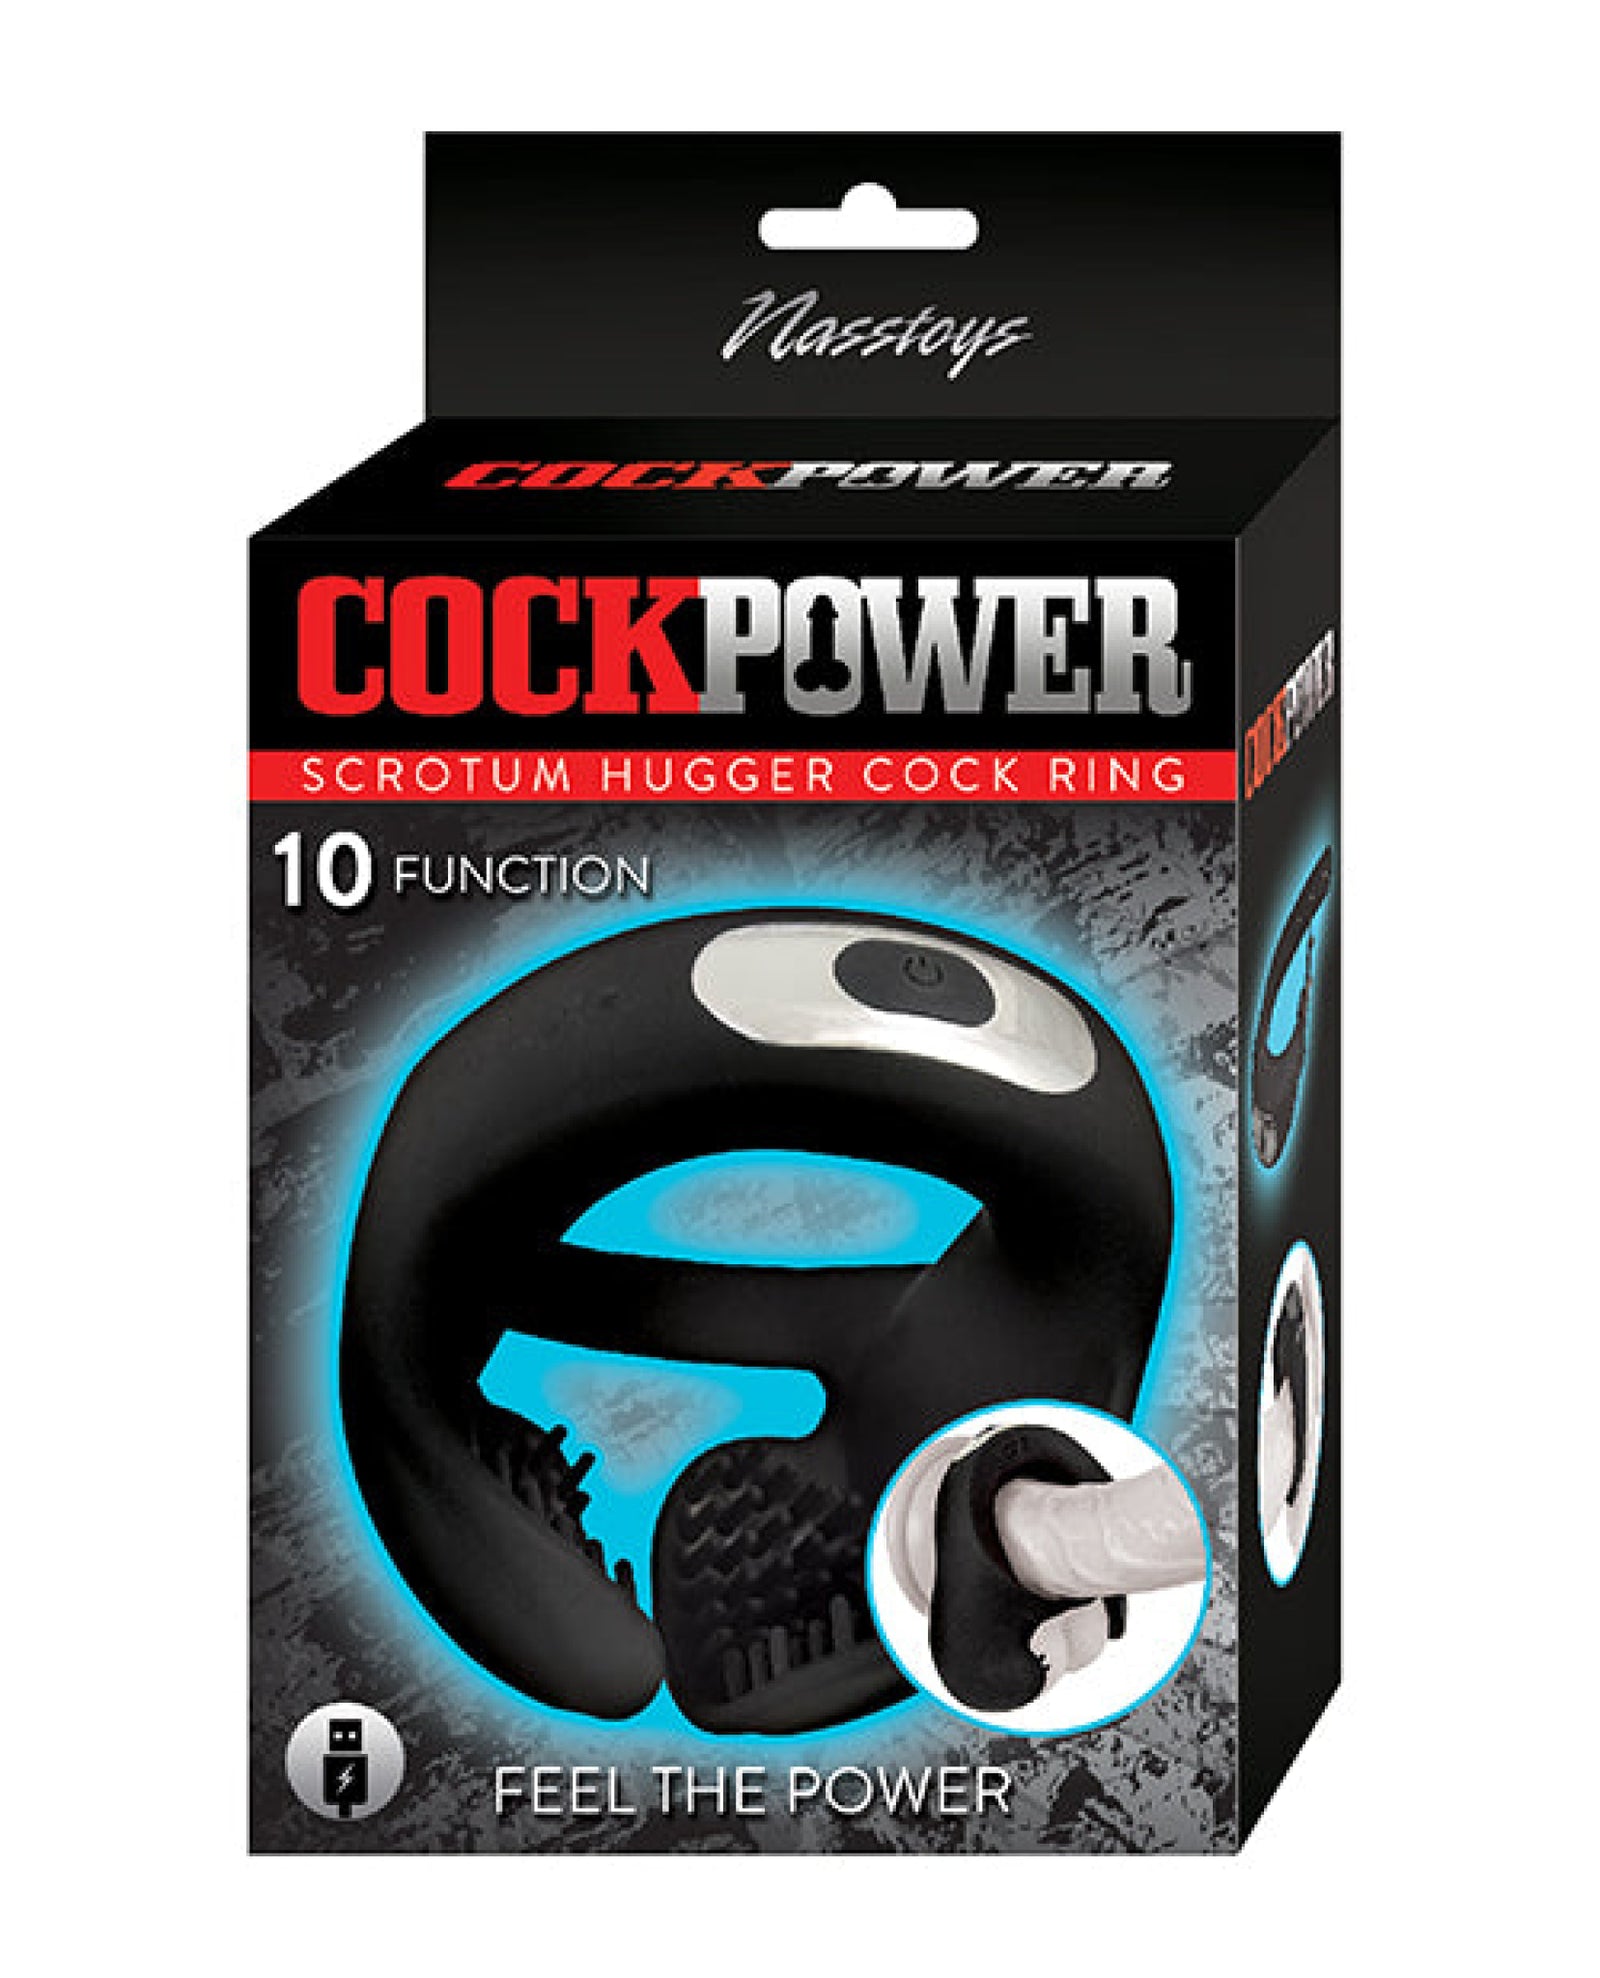 Cockpower Scrotum Hugger Cock Ring - Black Nasstoys